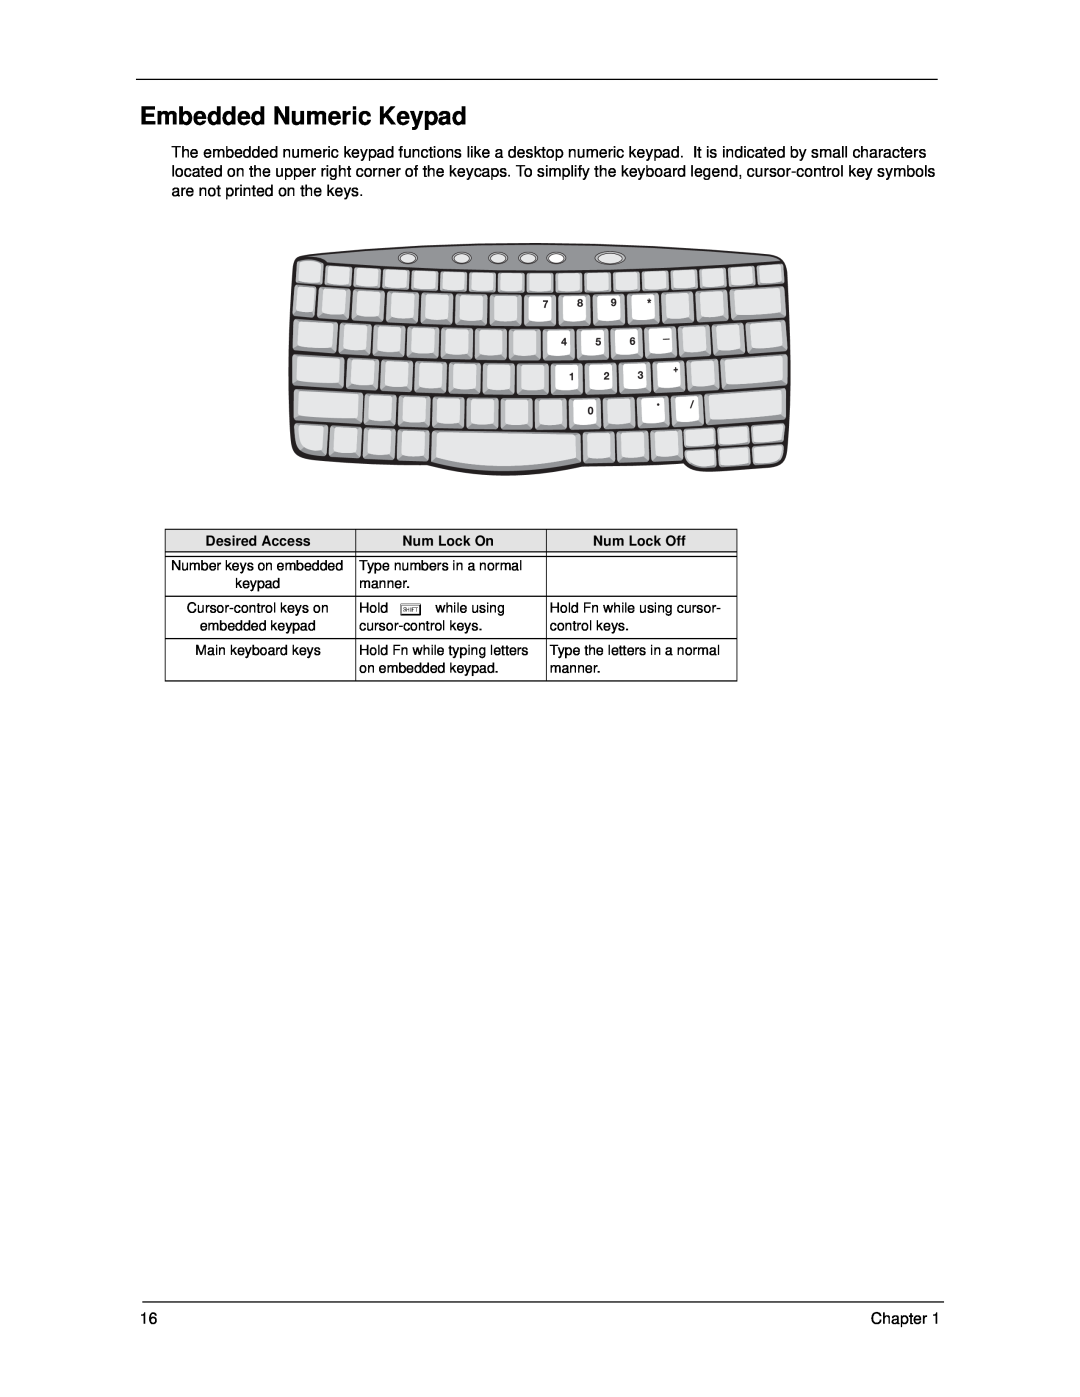 Acer 270 manual Embedded Numeric Keypad 